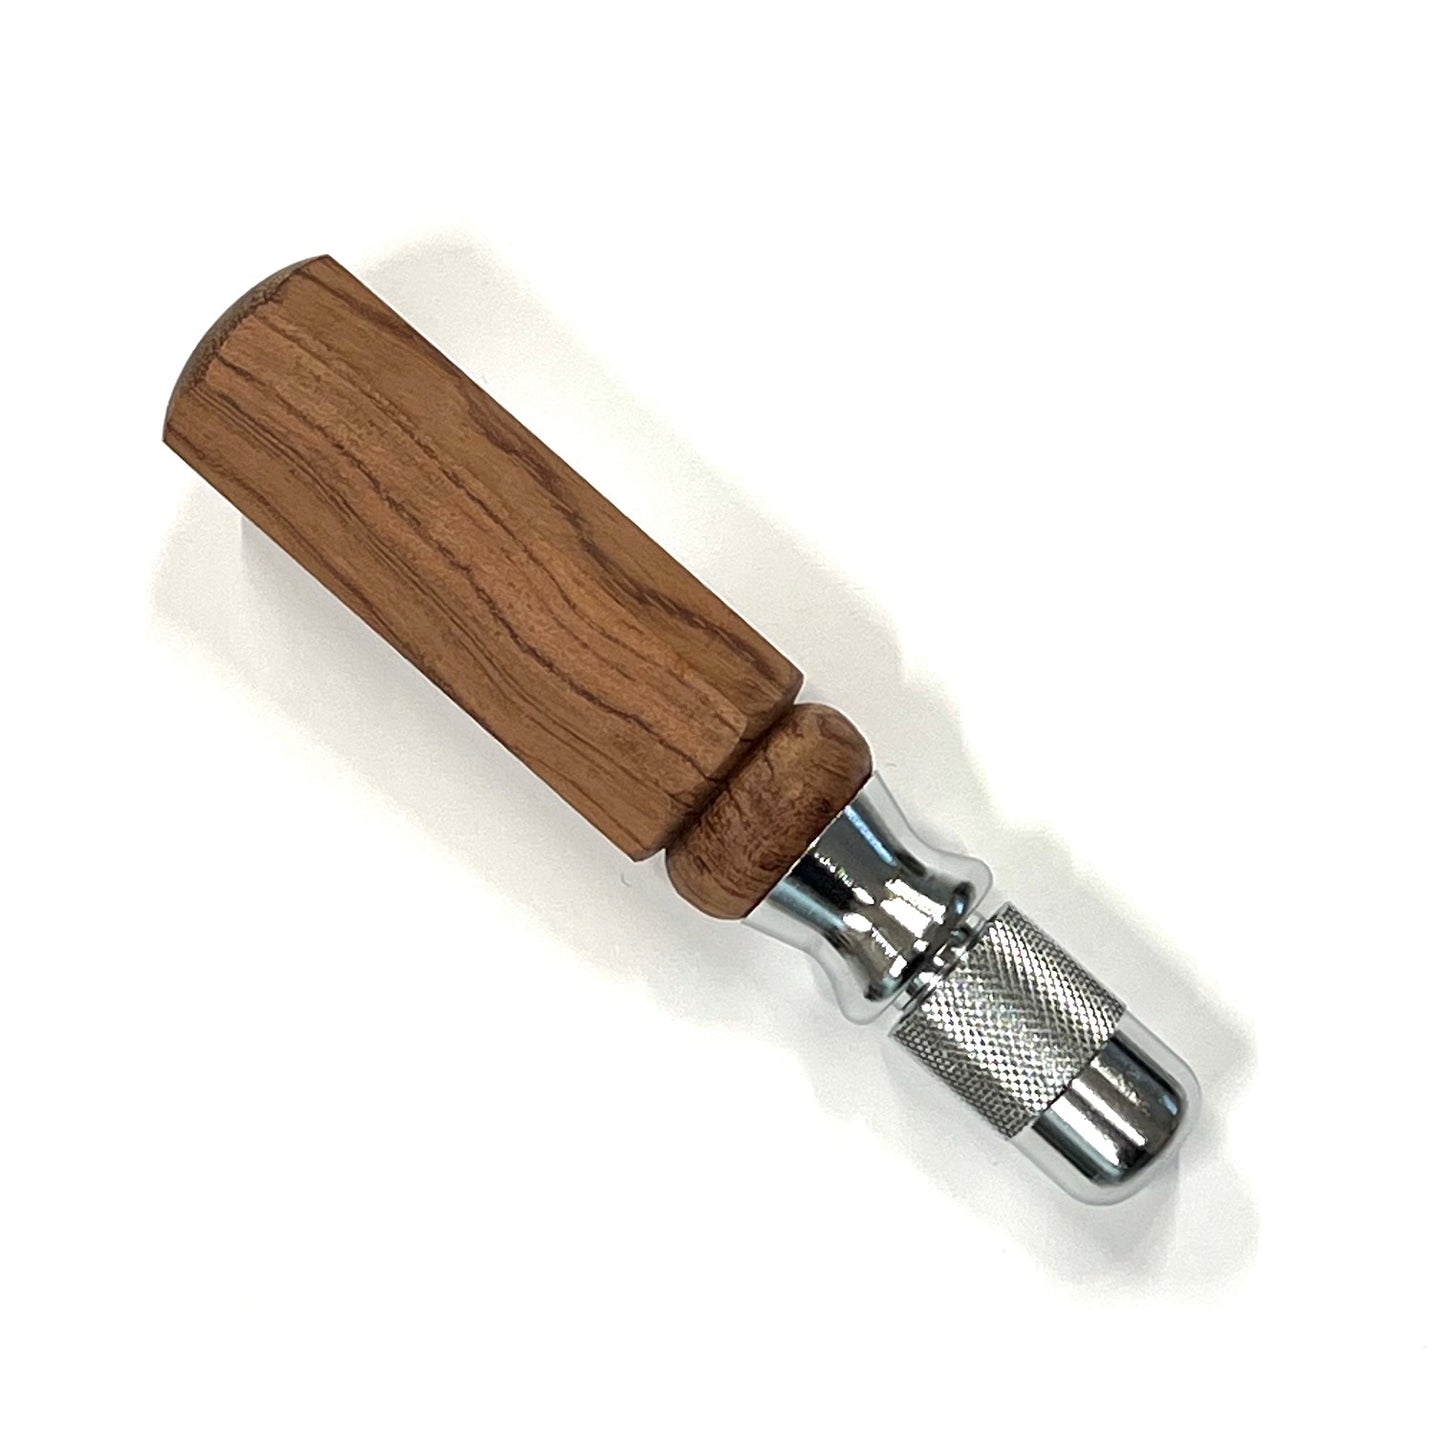 Rosewood combination handle